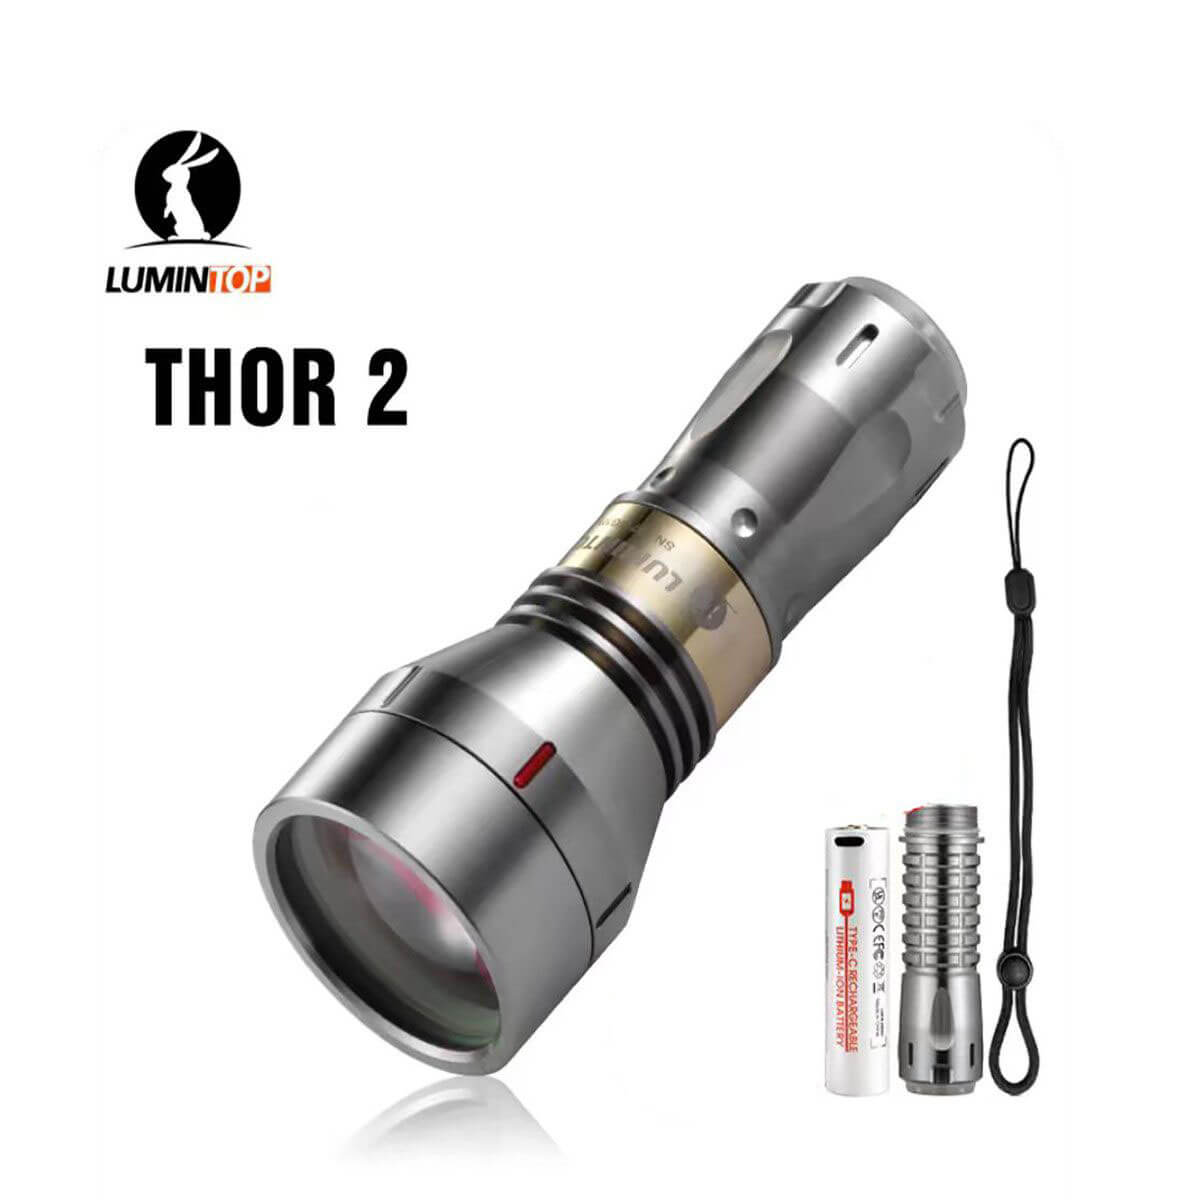 Lumintop THOR II Titanium Pocket LEP Flashlight